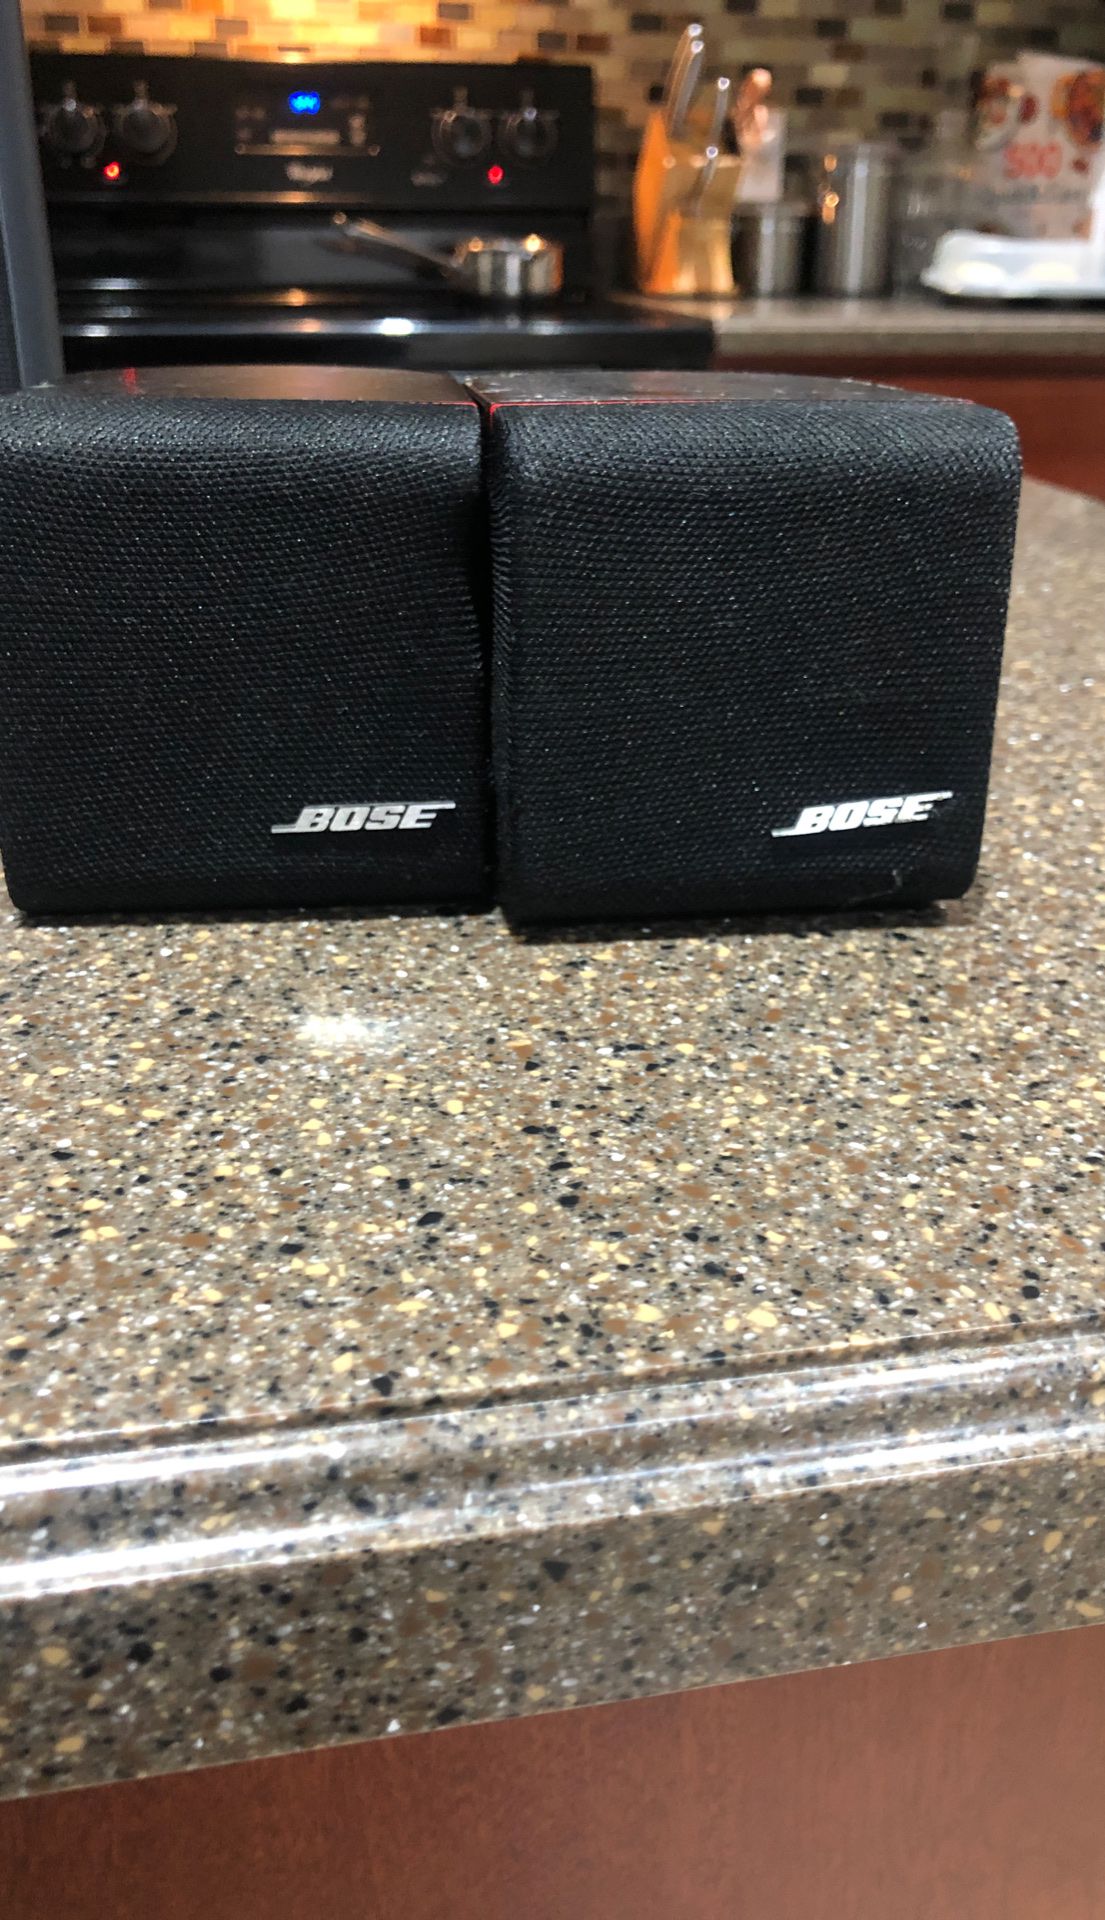 Set of Bose speakers